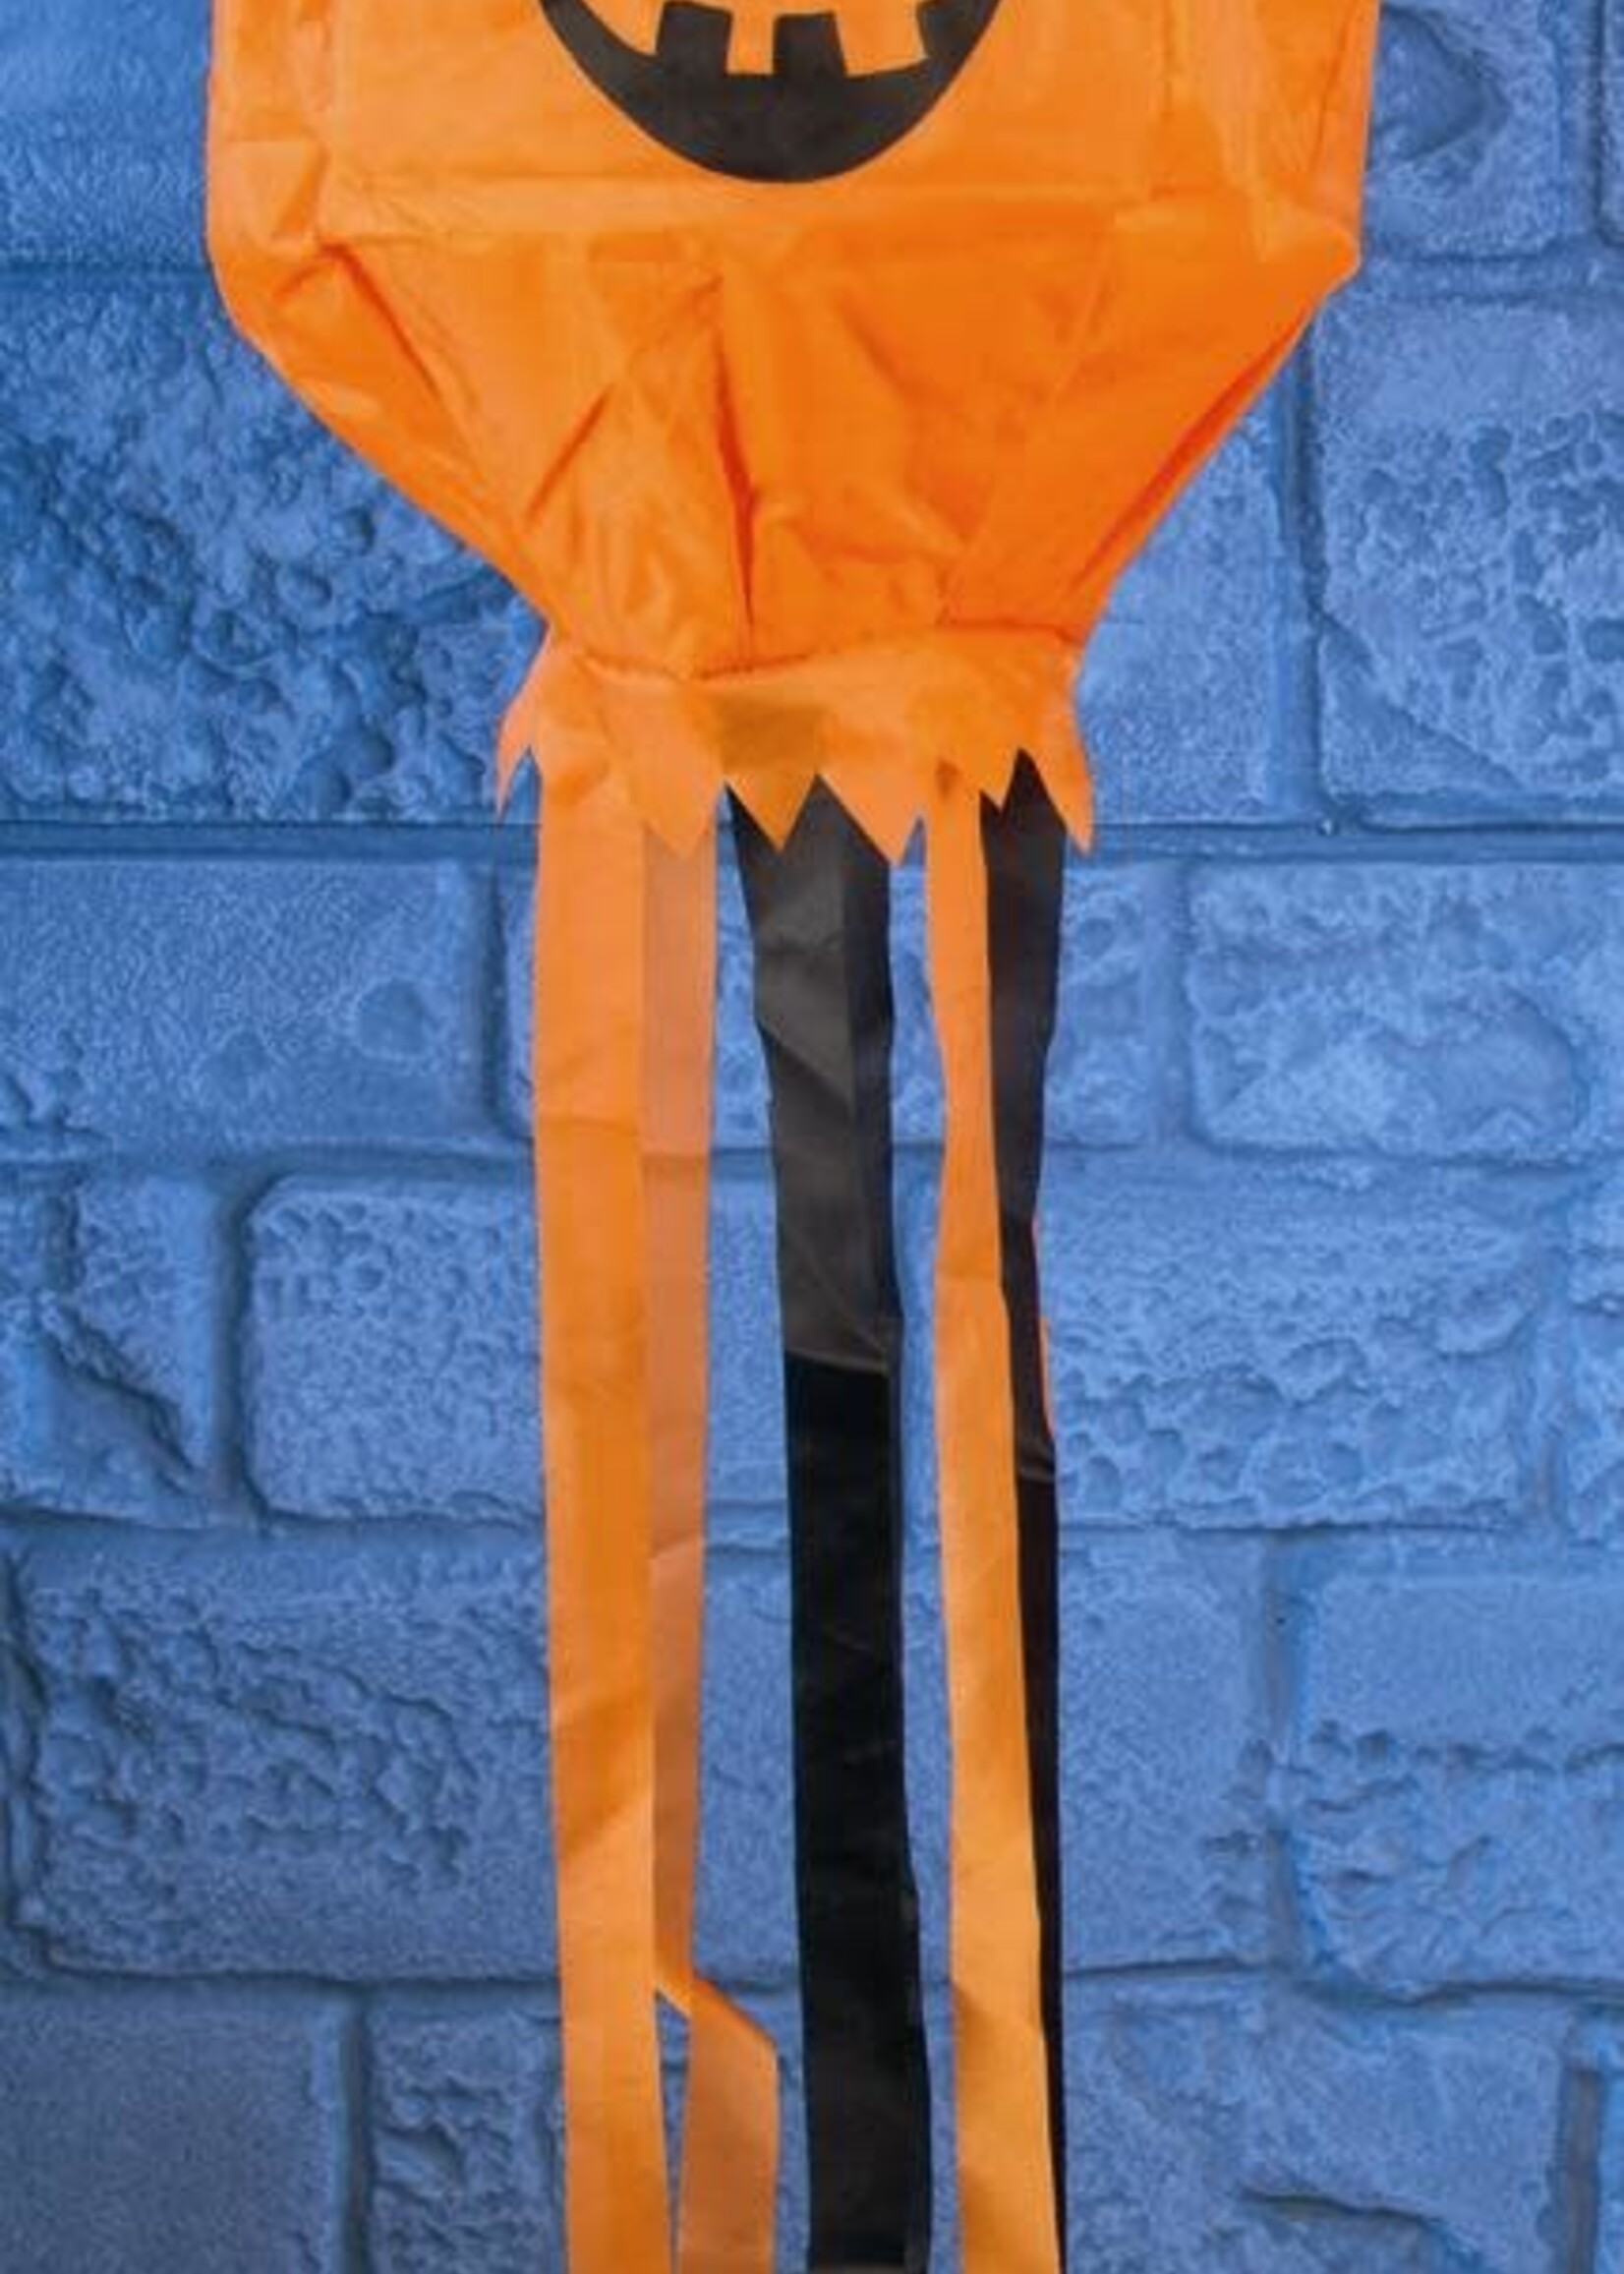 Premier Premier Pumpkin Face 1m Long Wind Sock Orange coloured